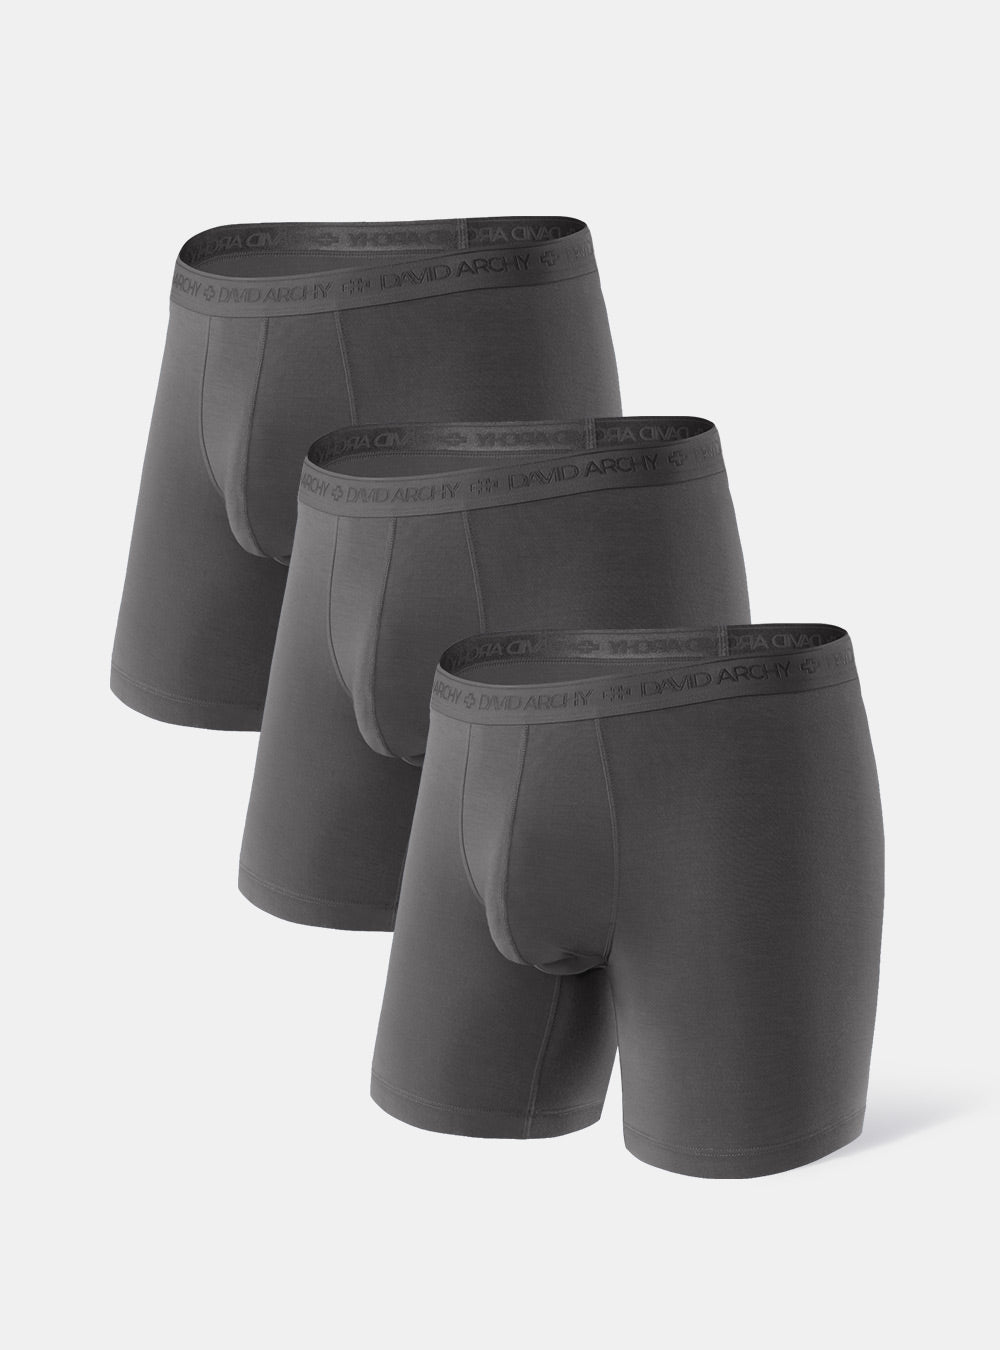 Men's Wetlook Leather Underwear Double Zipper Pouch Trunks Boxer